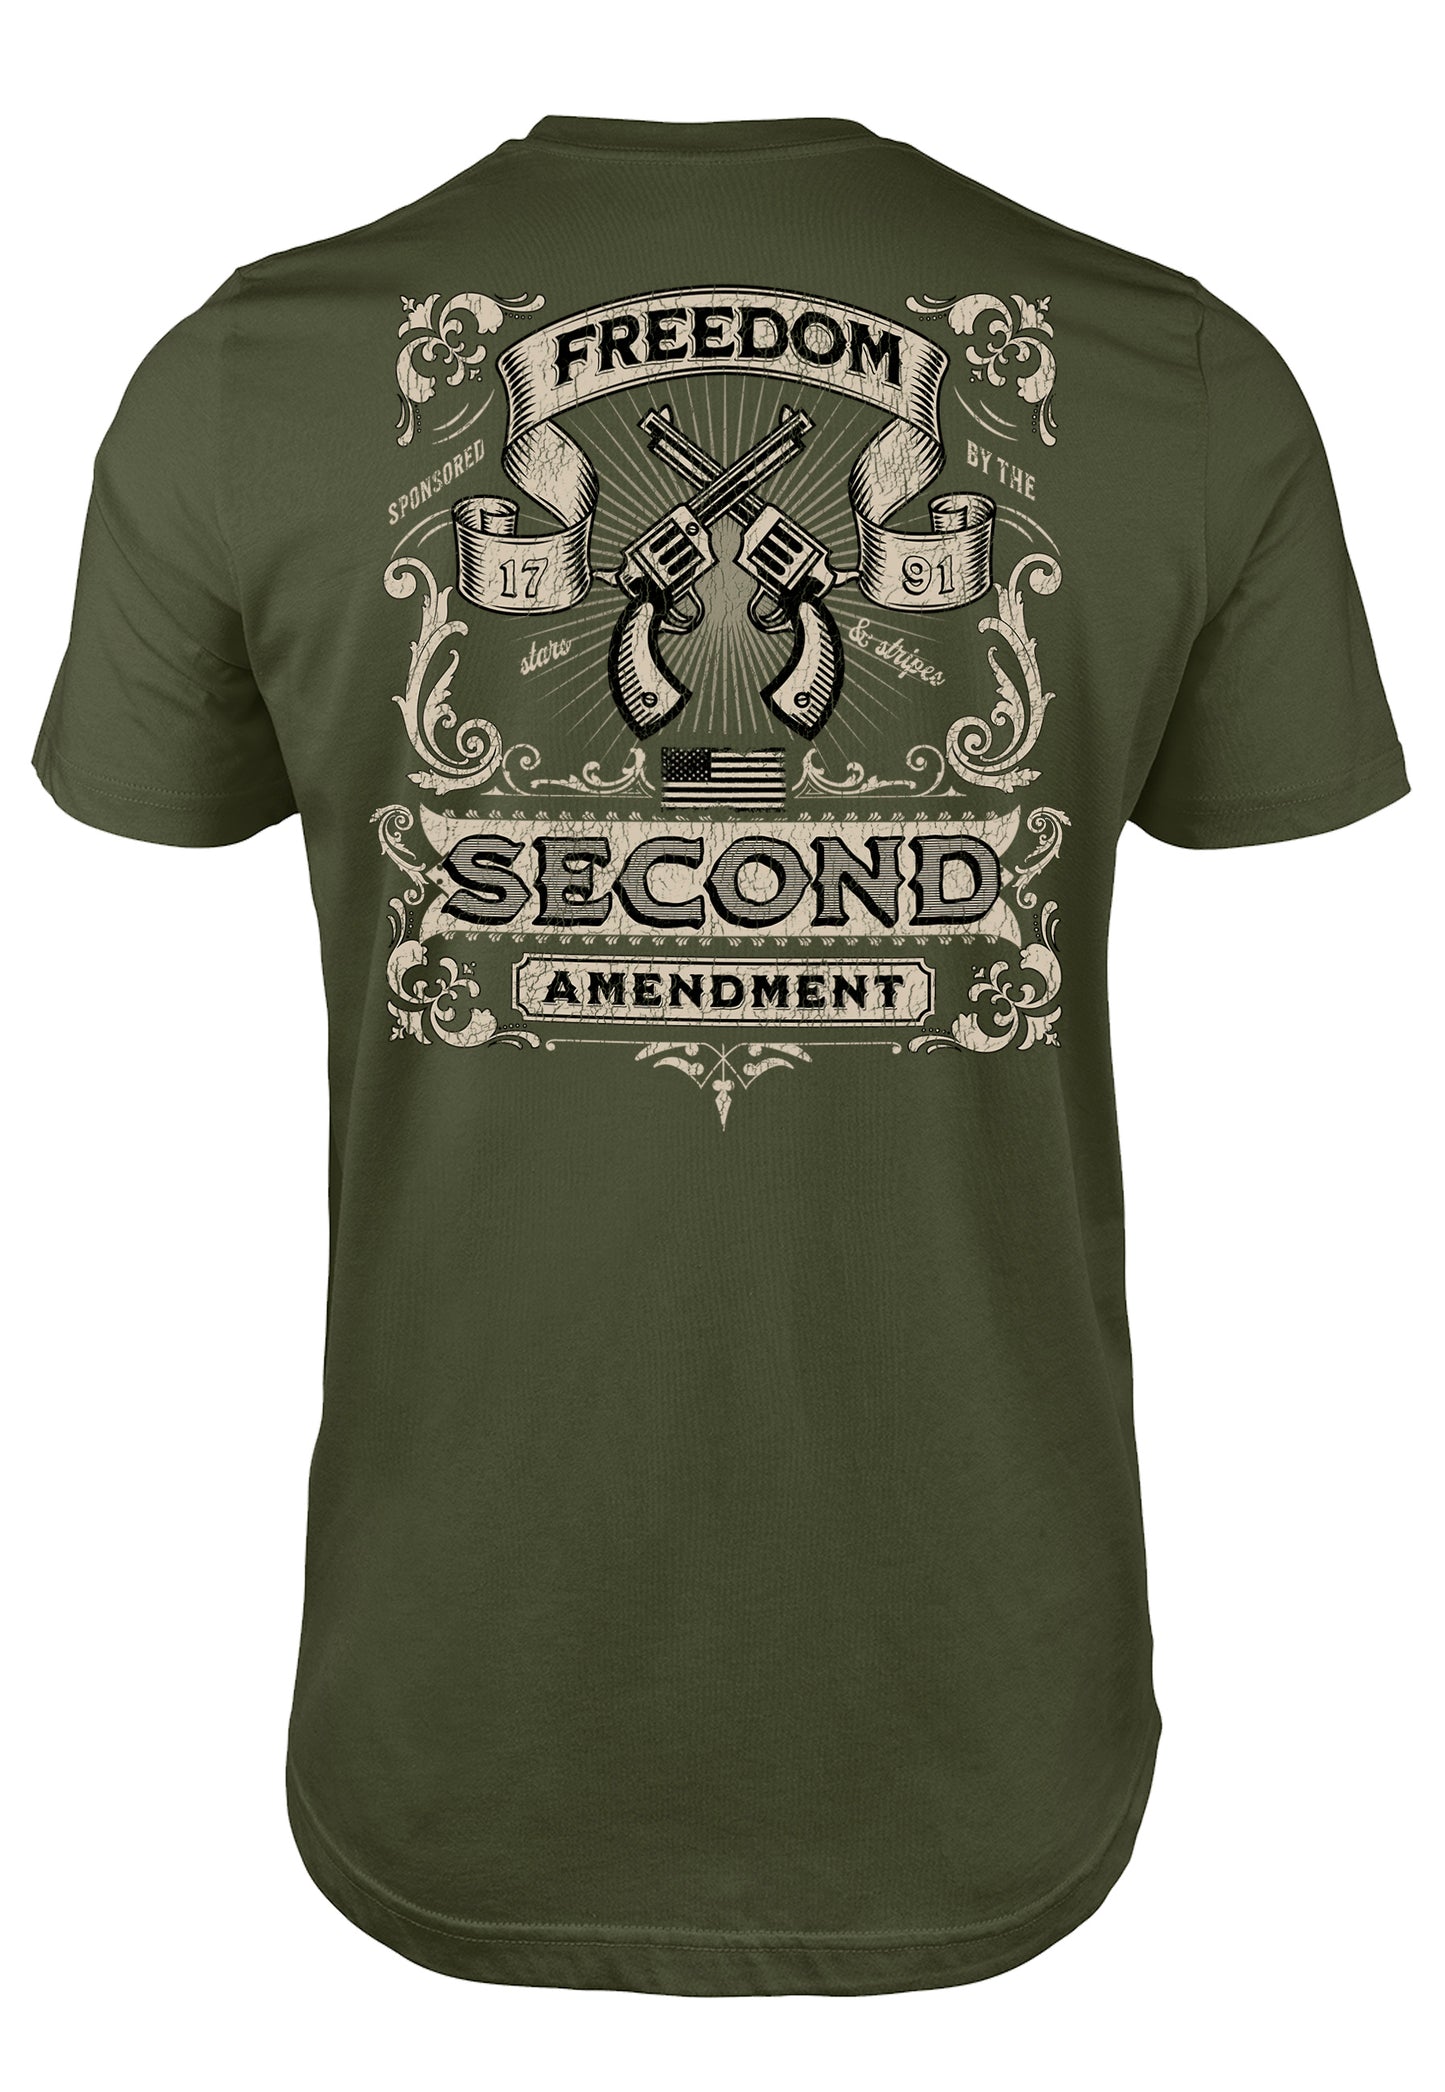 Pro second amendment original design t-shirt from ArmedAF®